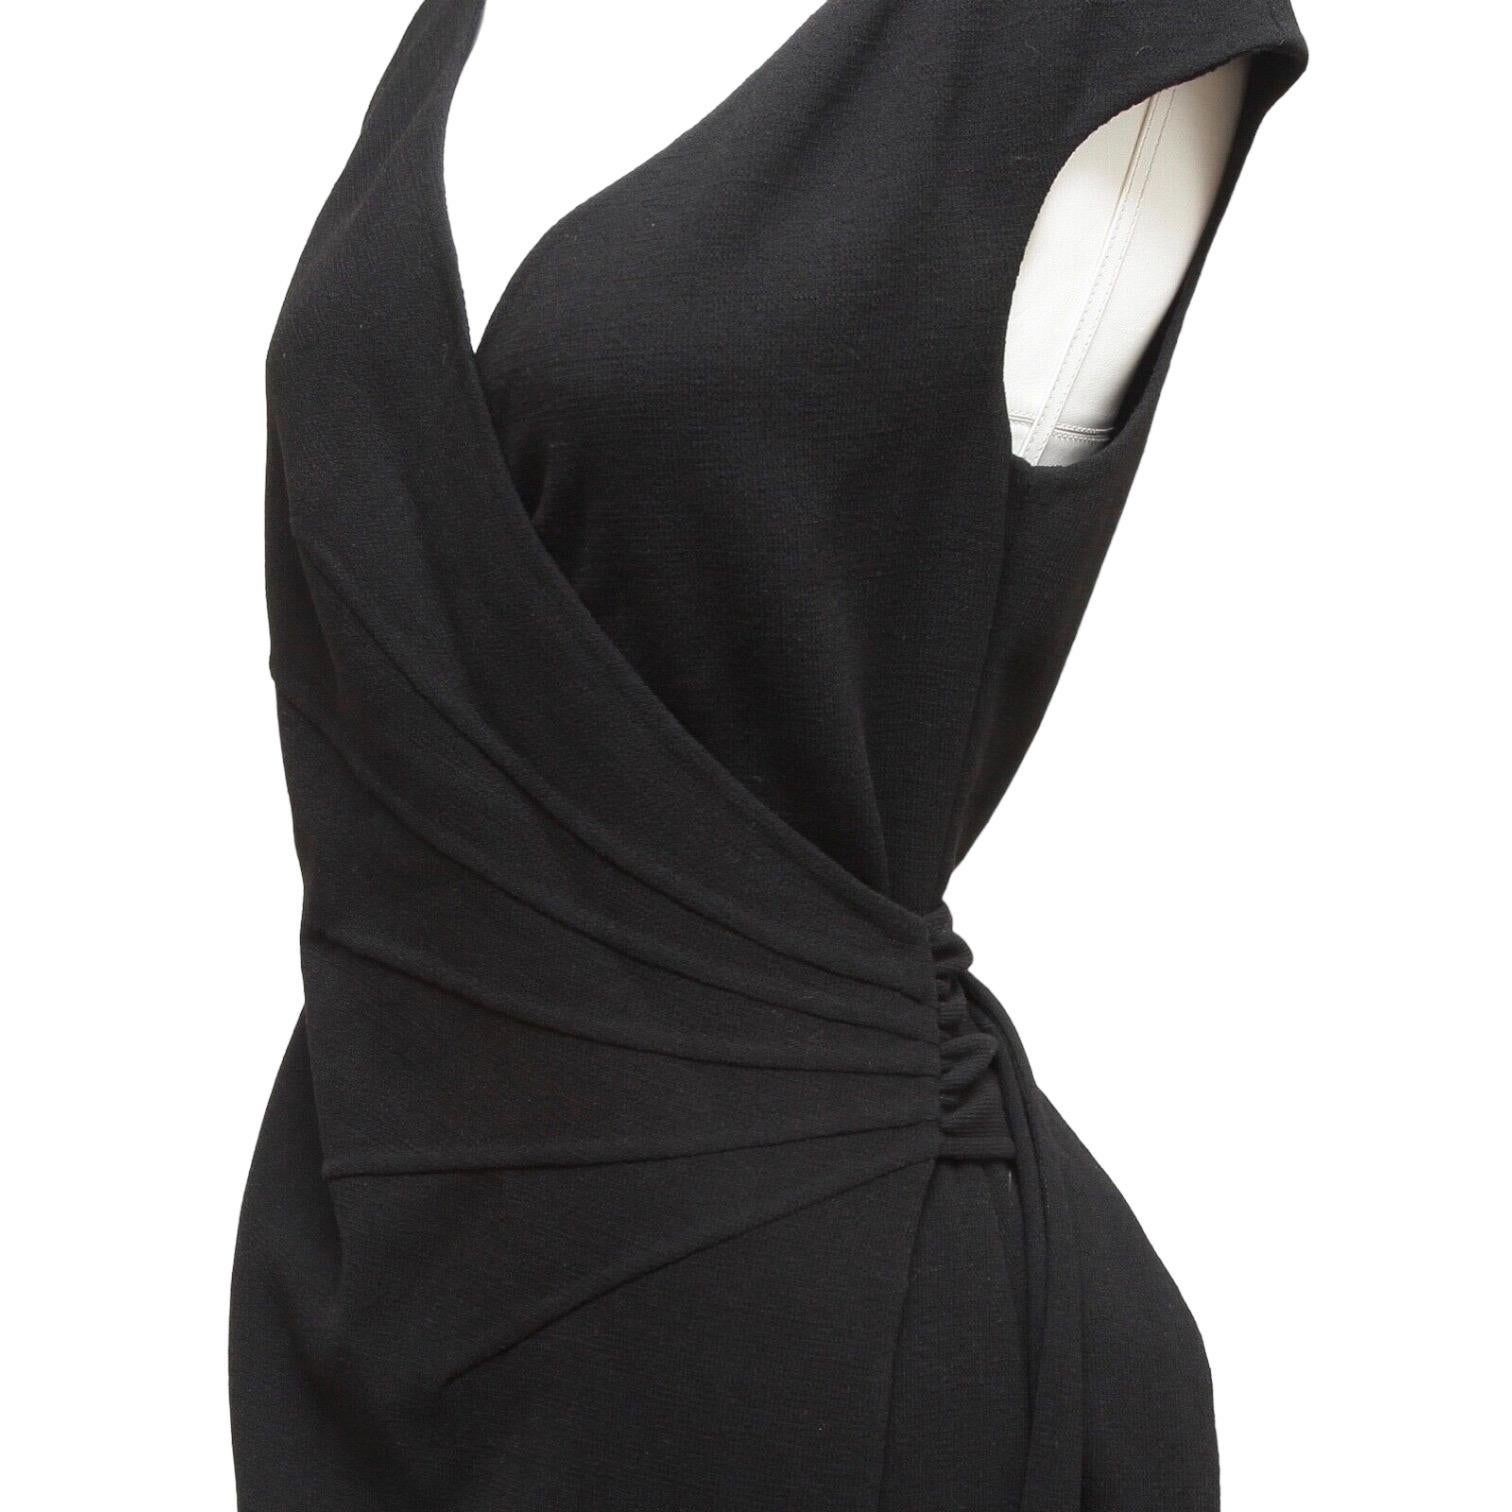 OSCAR DE LA RENTA Kleid Schwarz ärmellos Wrap Knit Sz 8 NWT $2190 Damen im Angebot